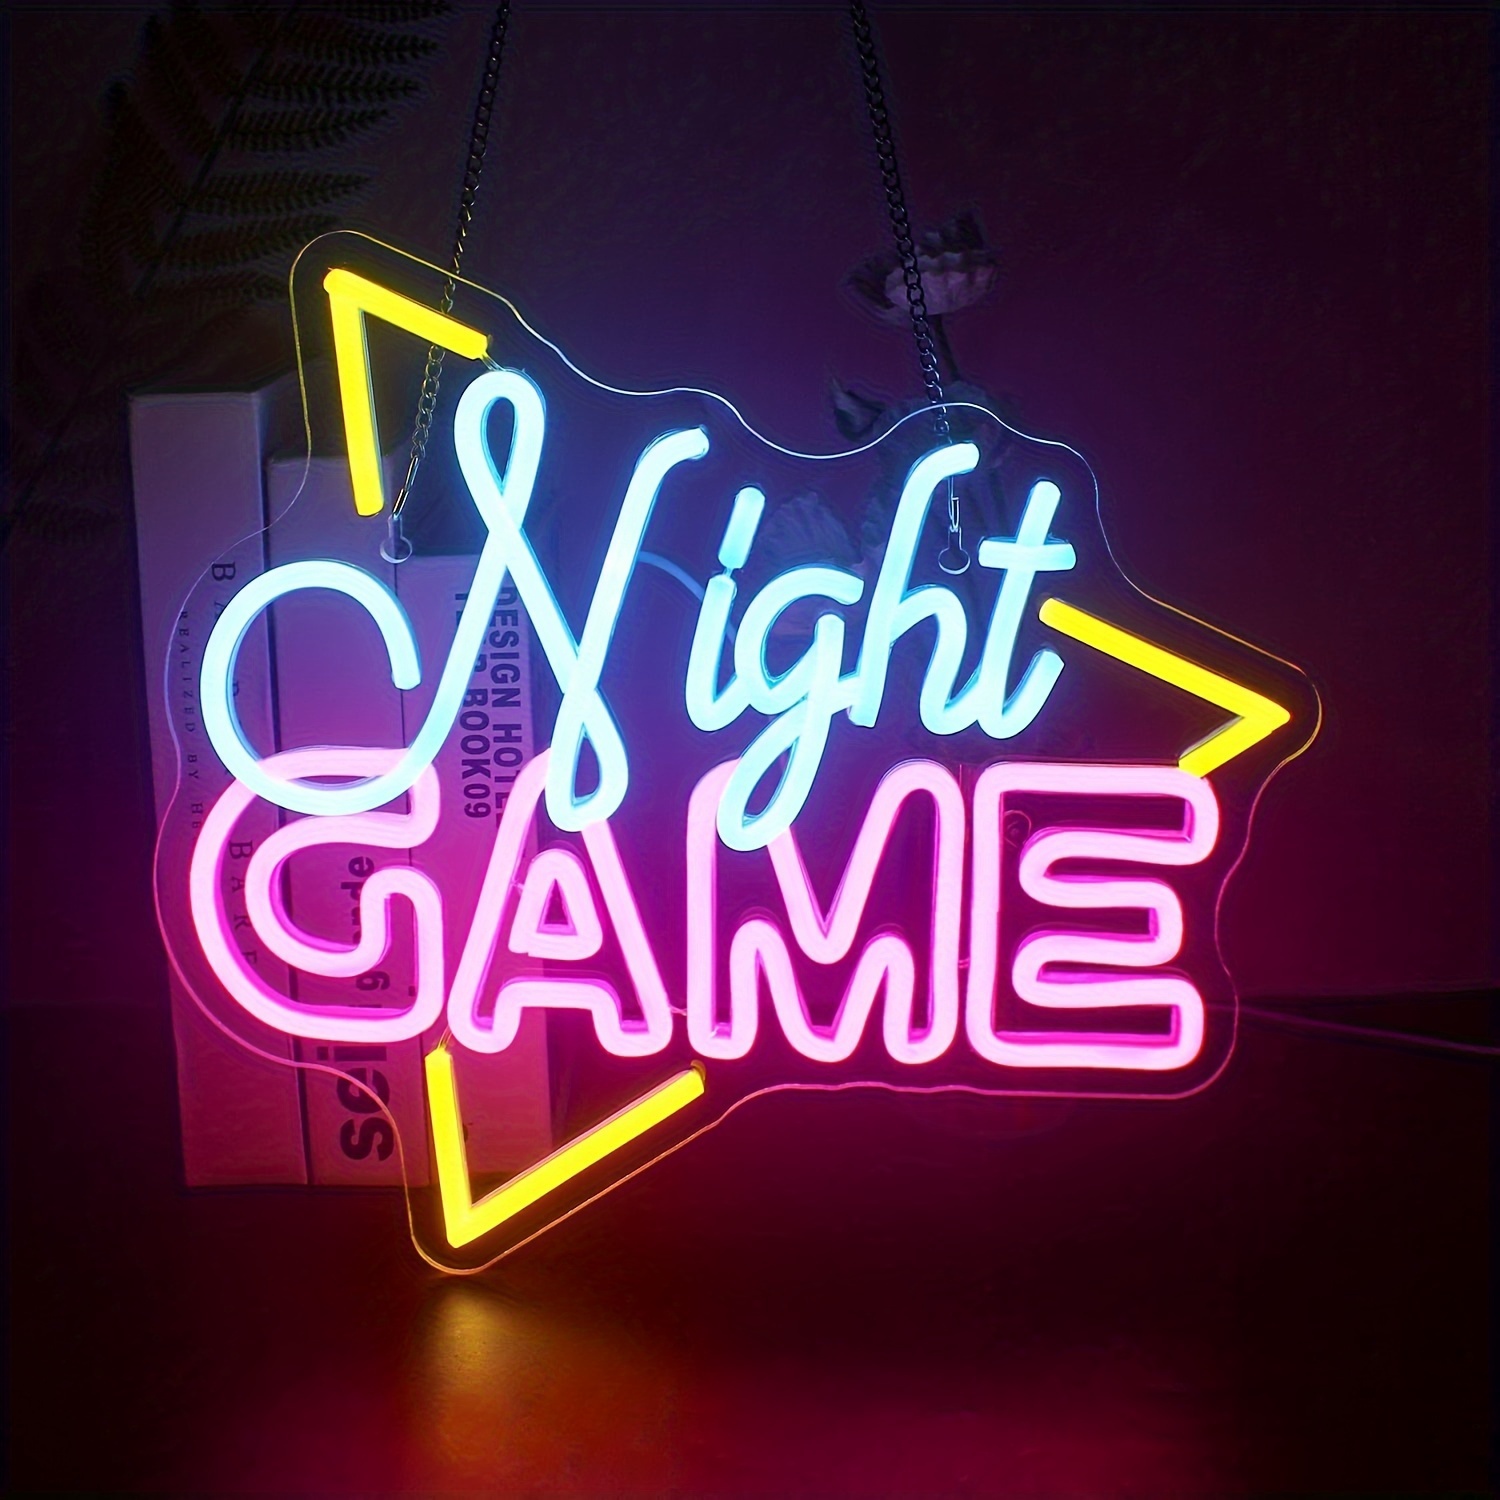 https://img.kwcdn.com/product/game-night-neon-light/d69d2f15w98k18-f7e9e007/Fancyalgo/VirtualModelMatting/c60b752416400754b7ea04b22f2fda8f.jpg